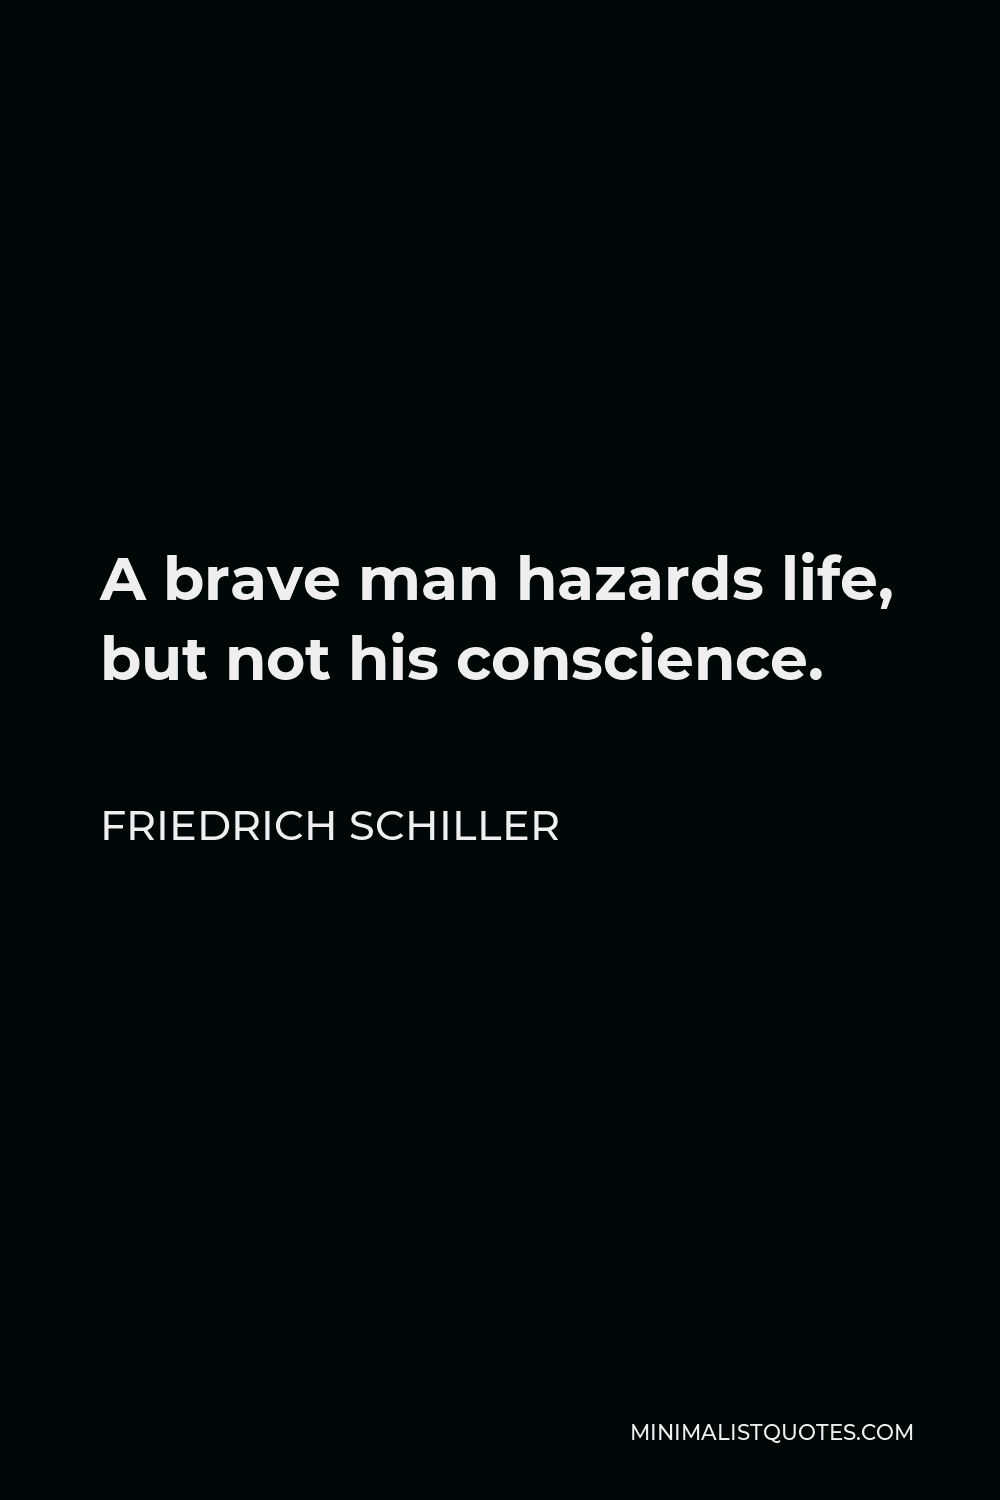 Friedrich Schiller Quote - A brave man hazards life, but not his conscience.